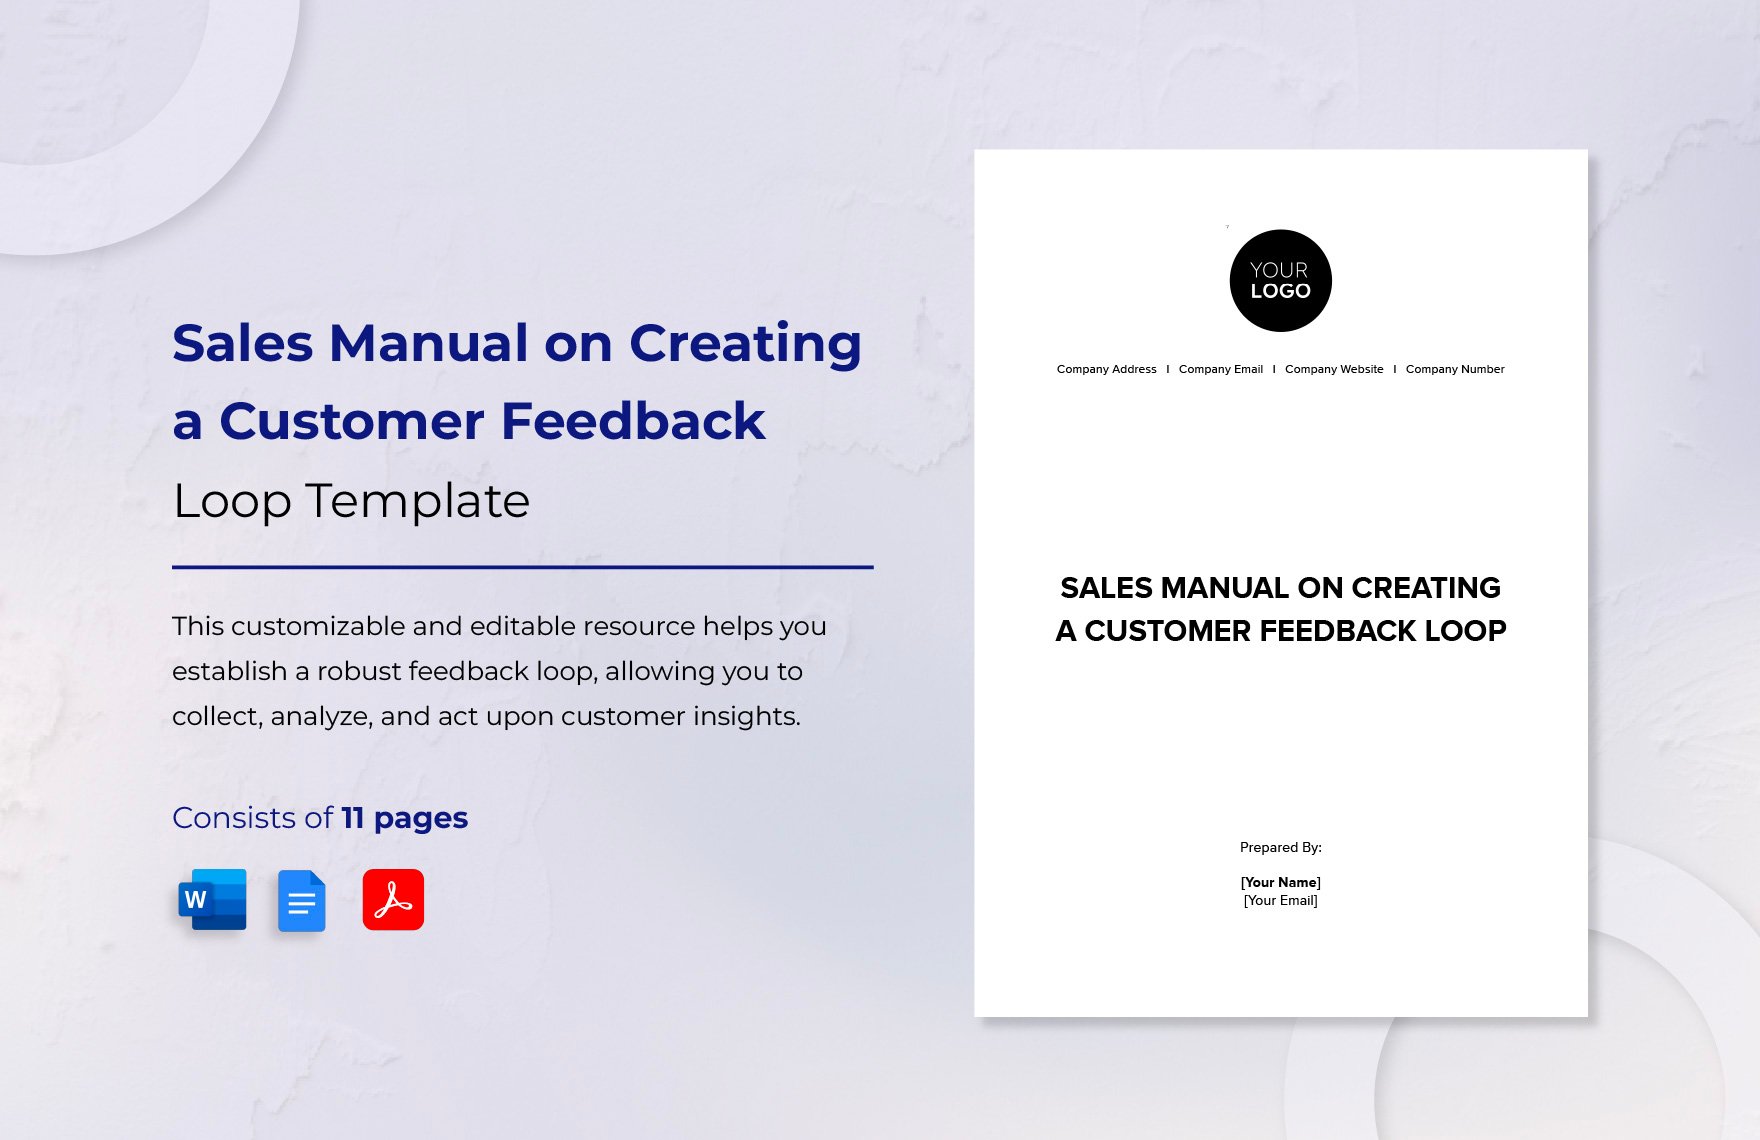 Sales Manual on Creating a Customer Feedback Loop Template